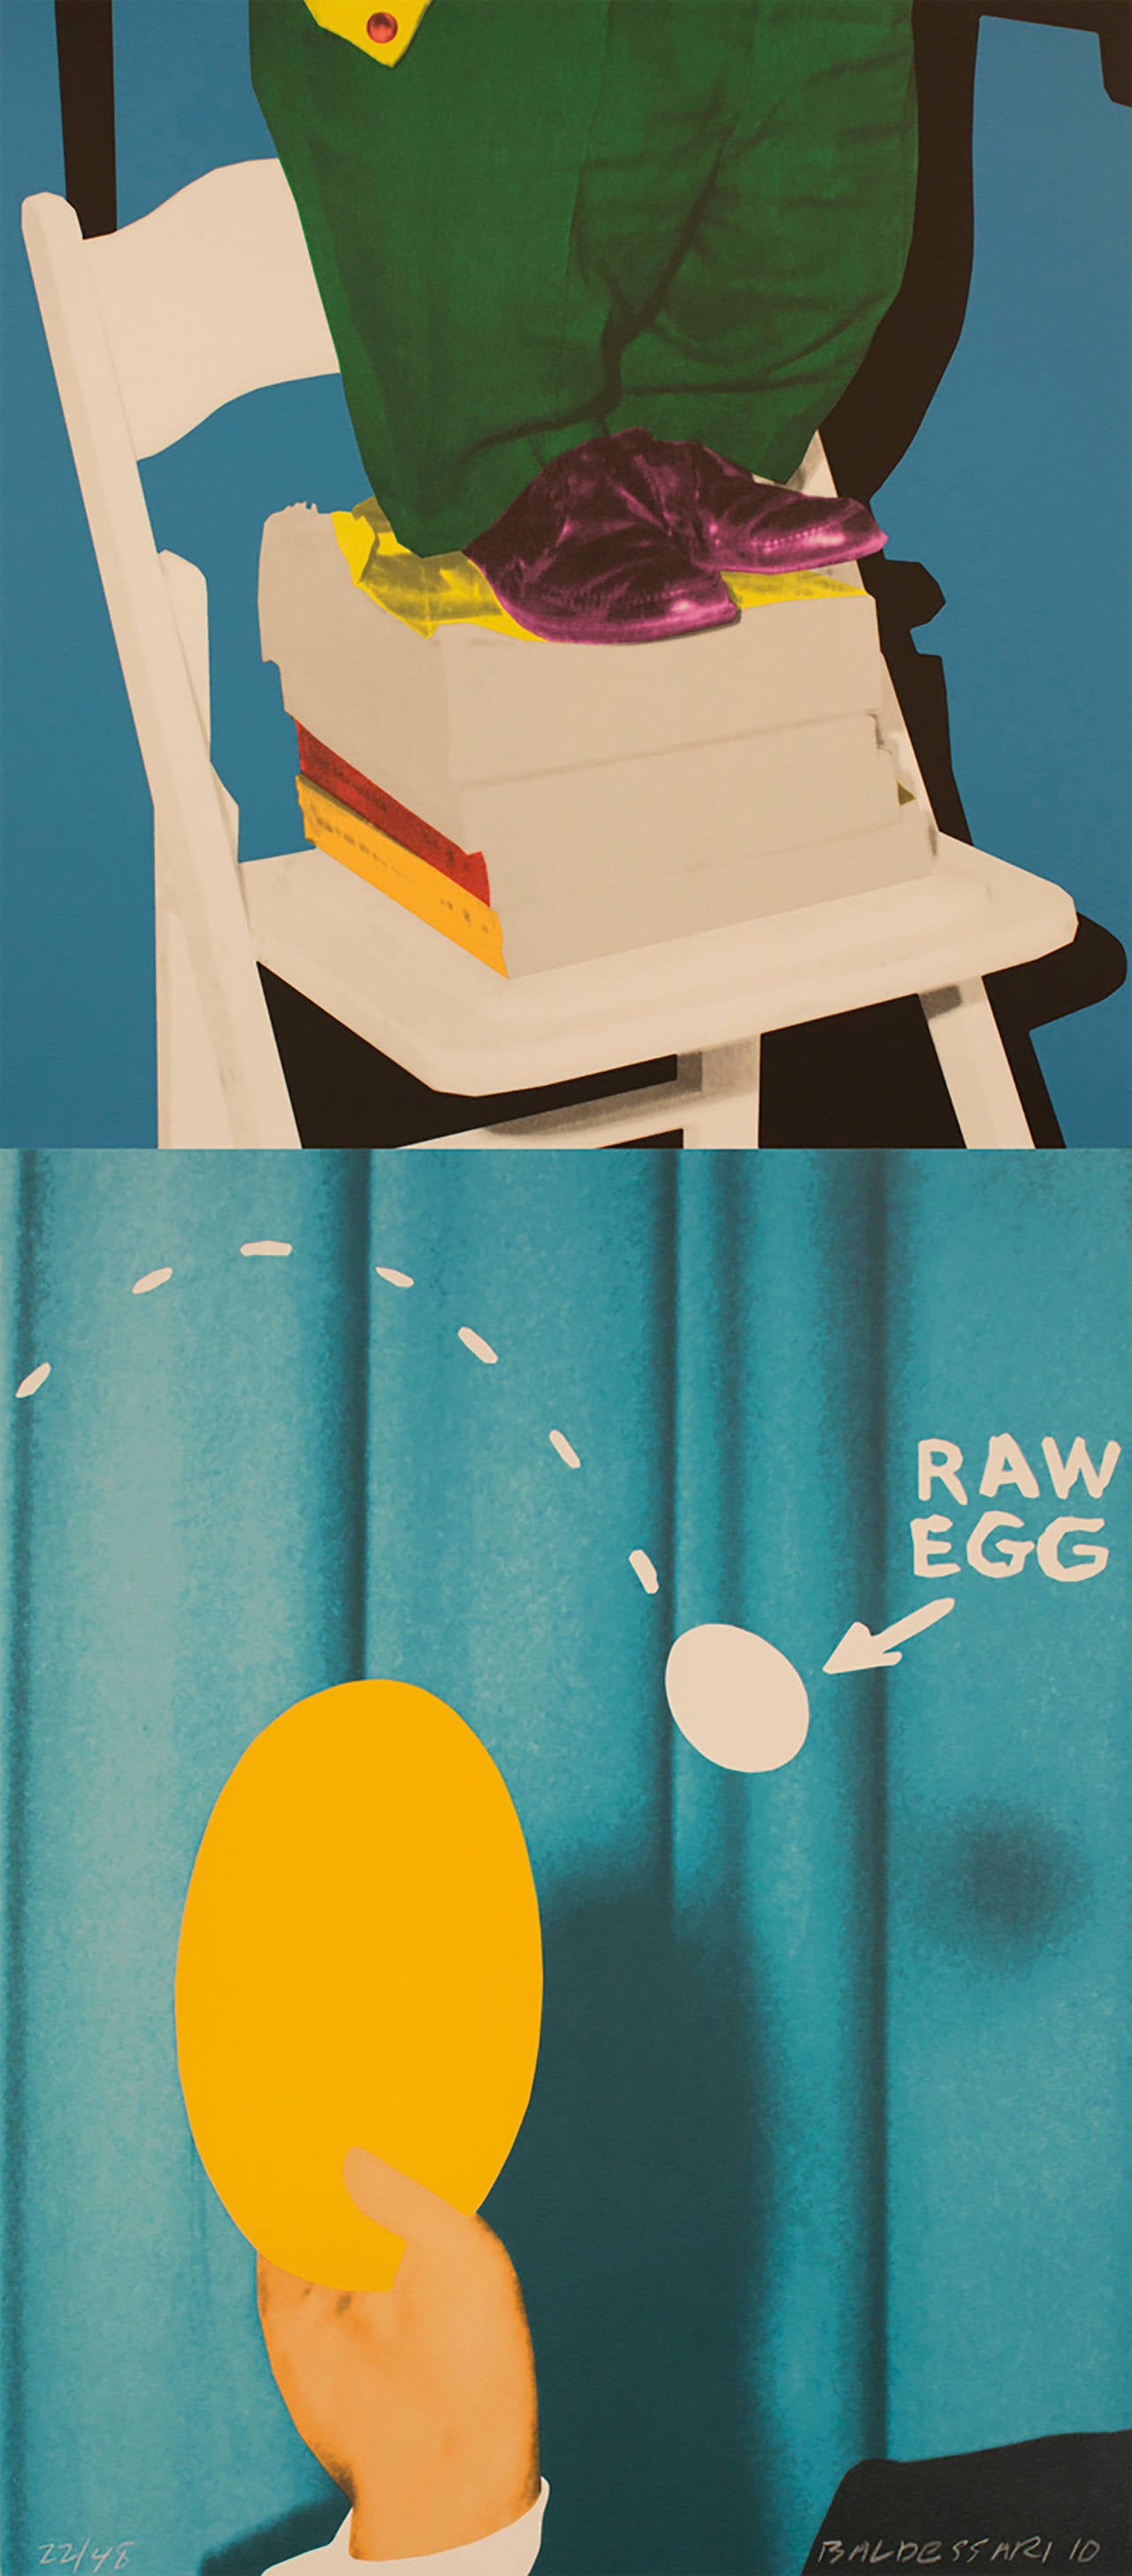 John Baldessari Abstract Print - Hand and/or Feet:Chair and Books/Plate and Egg